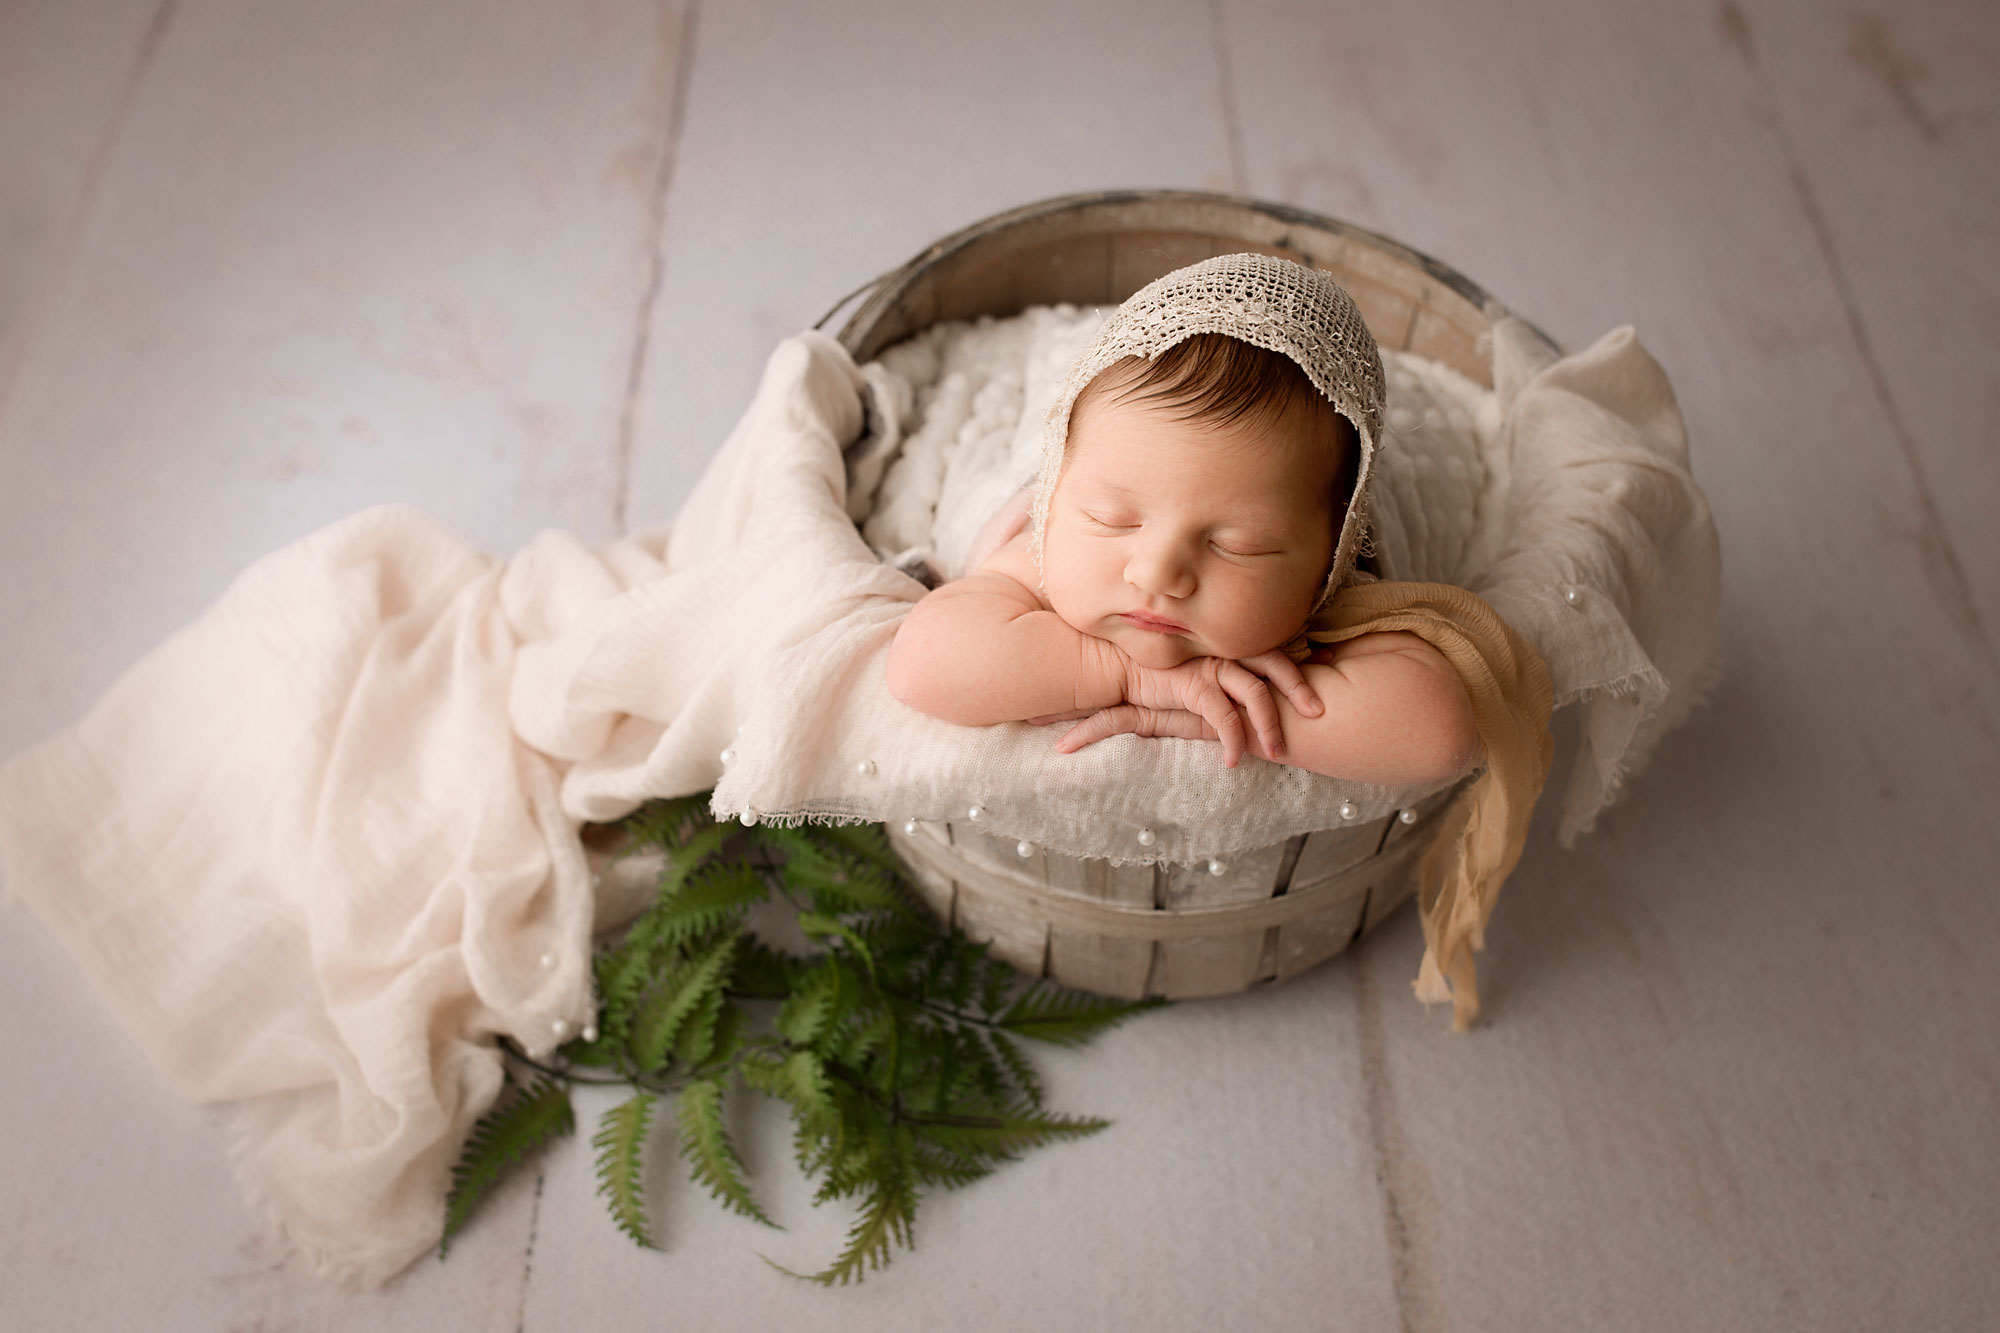 flemington nj newborn photography baby in a bucket